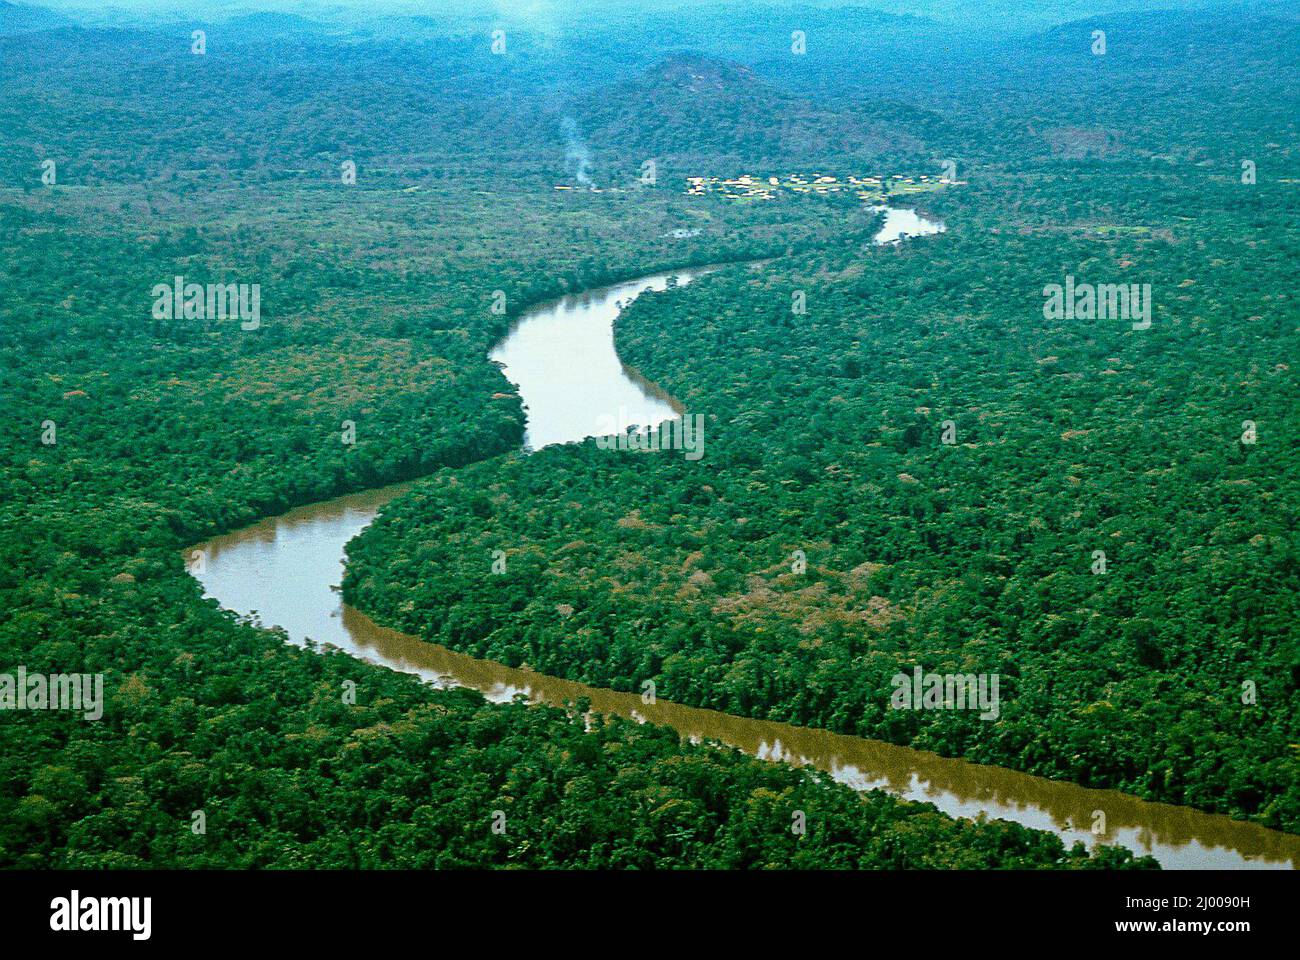 Реки и притоки южной америки. Река Амазонка. Река Амазонка река Амазонка. Бразилия Амазонская низменность. Исток реки Амазонка.